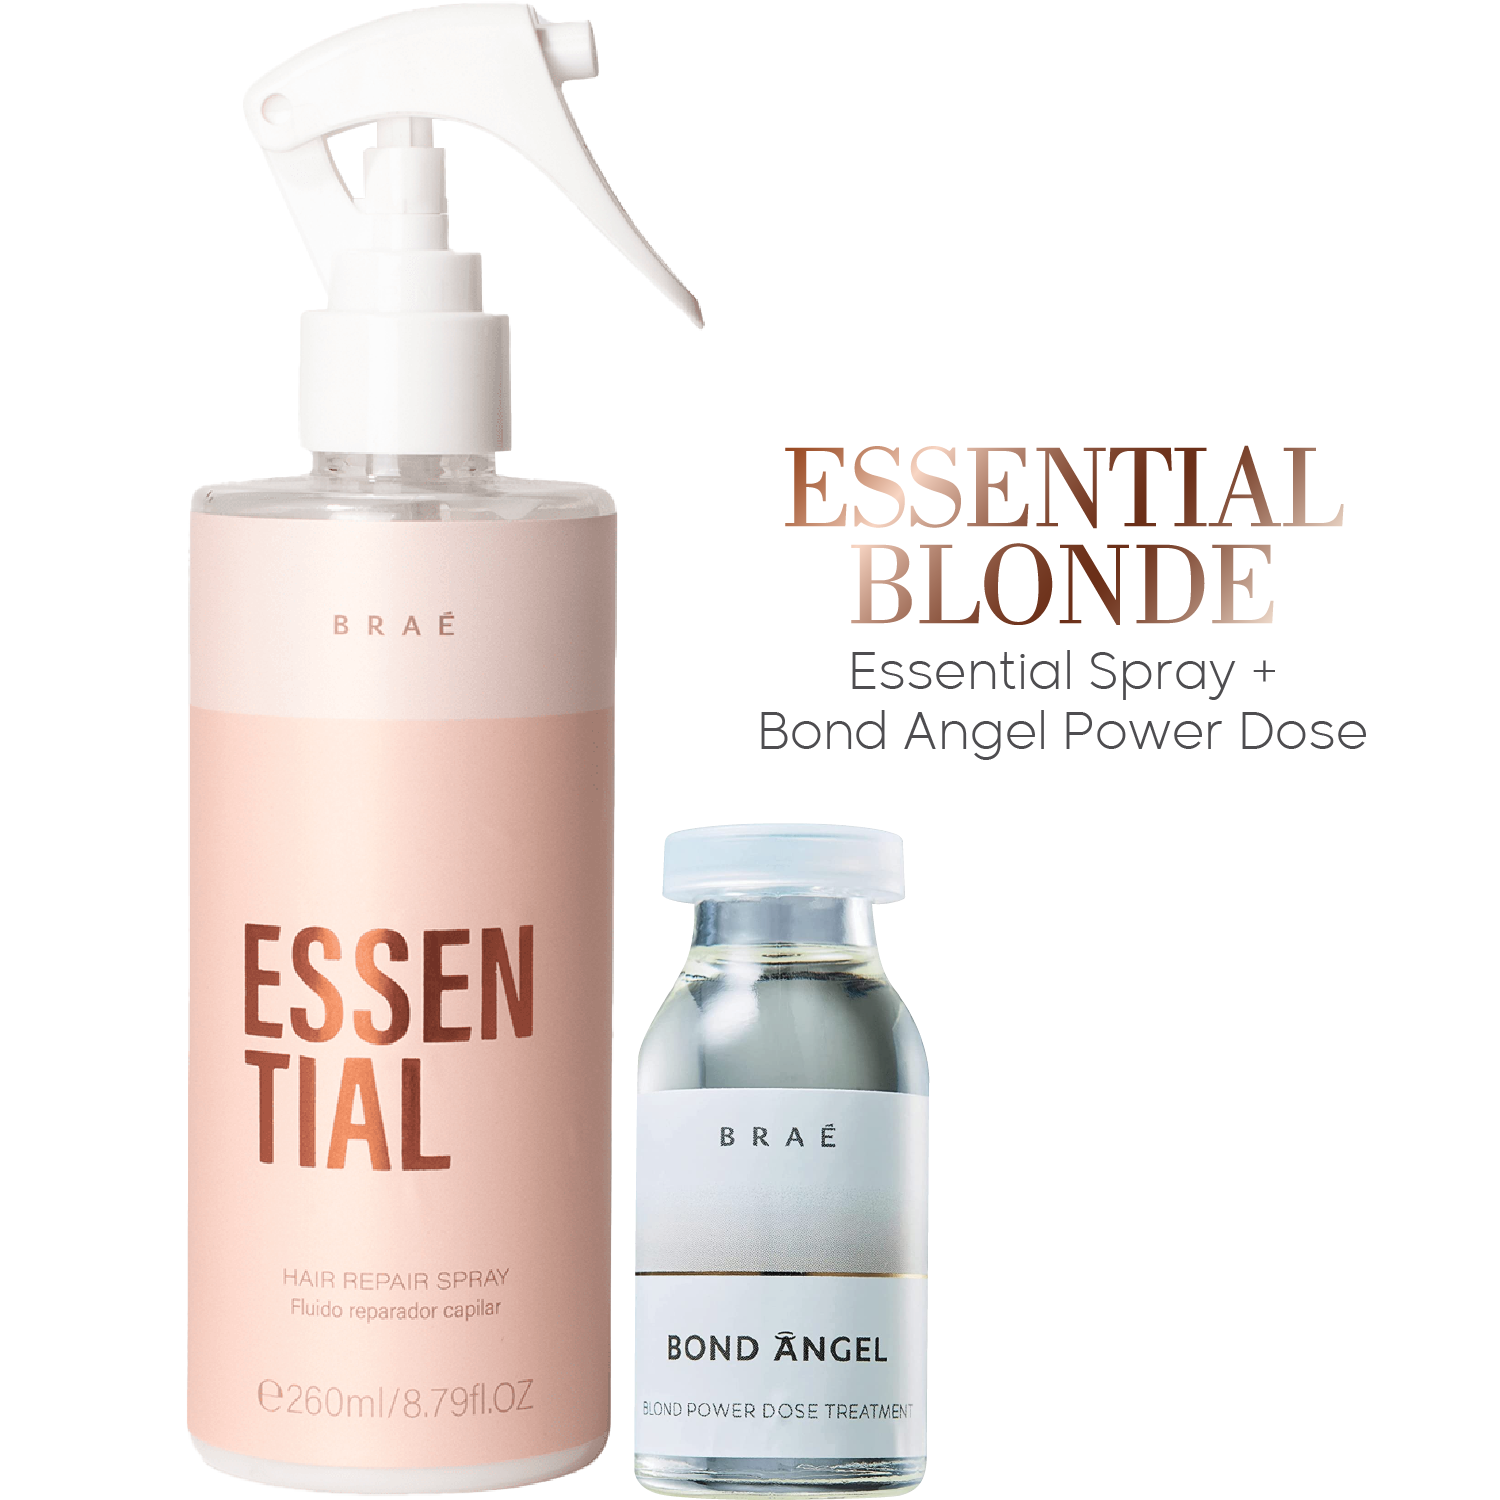 Essential Blonde: Essential Hair Repair Spray + Bond Angel Power Dose